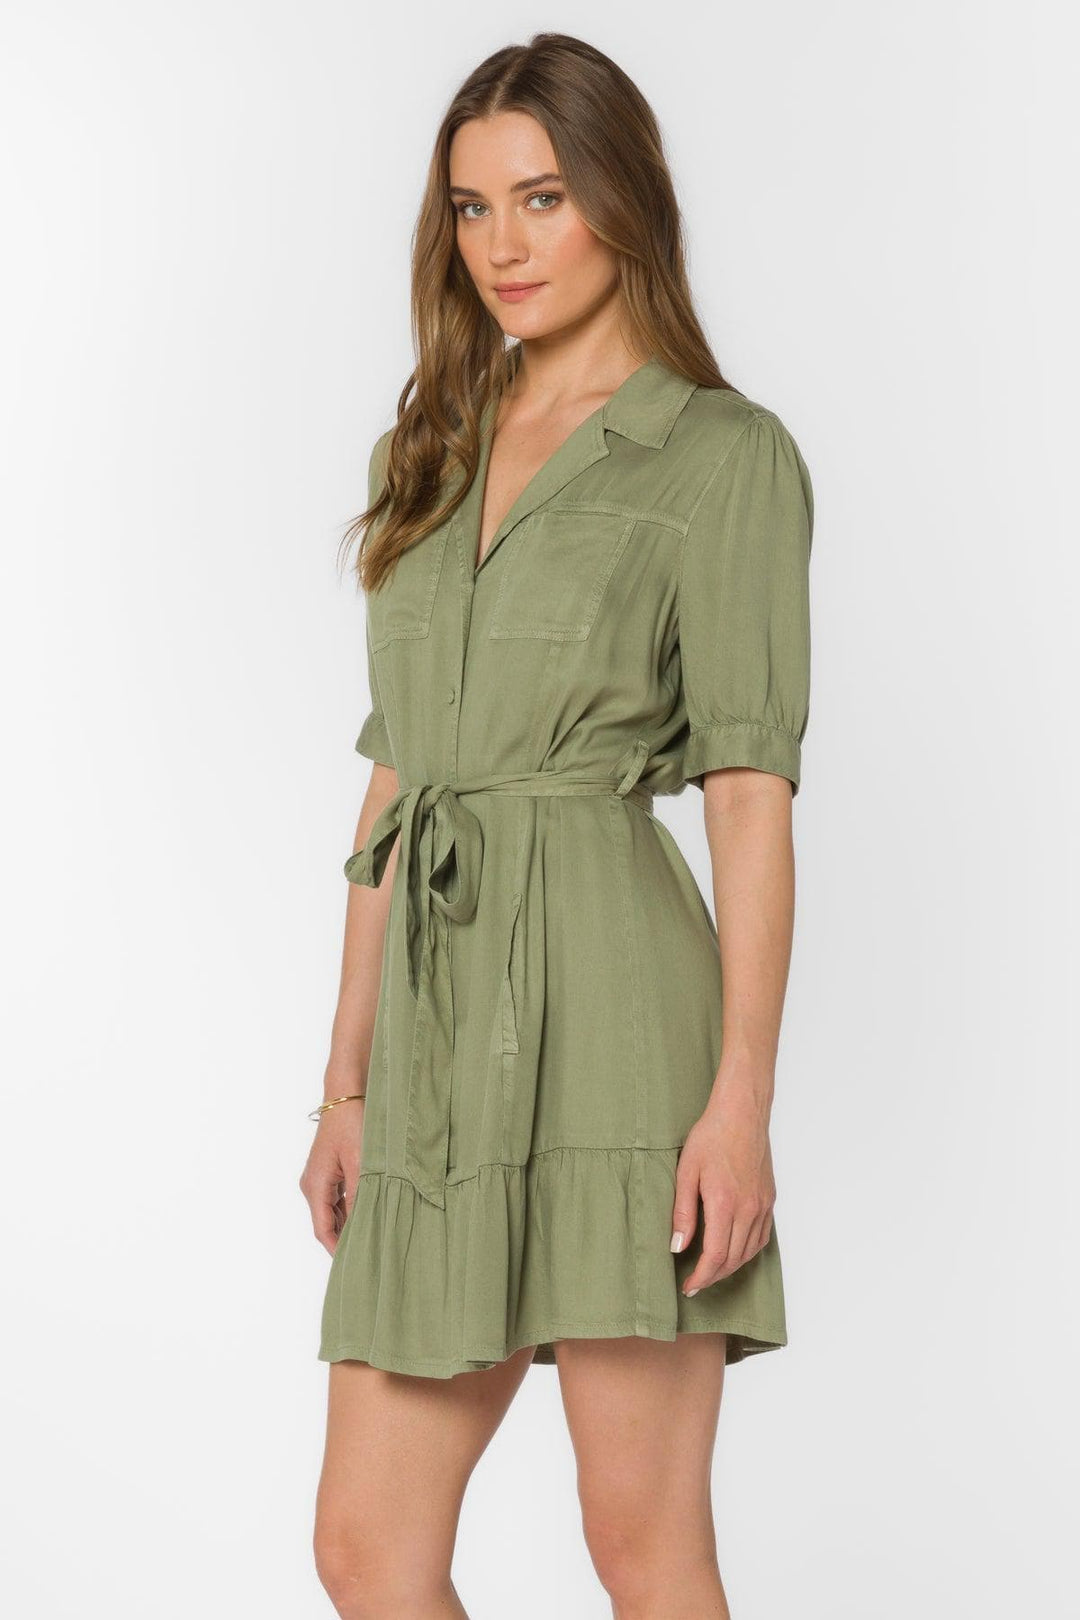 Belva Olive Dress Dresses Scout and Poppy Fashion Boutique